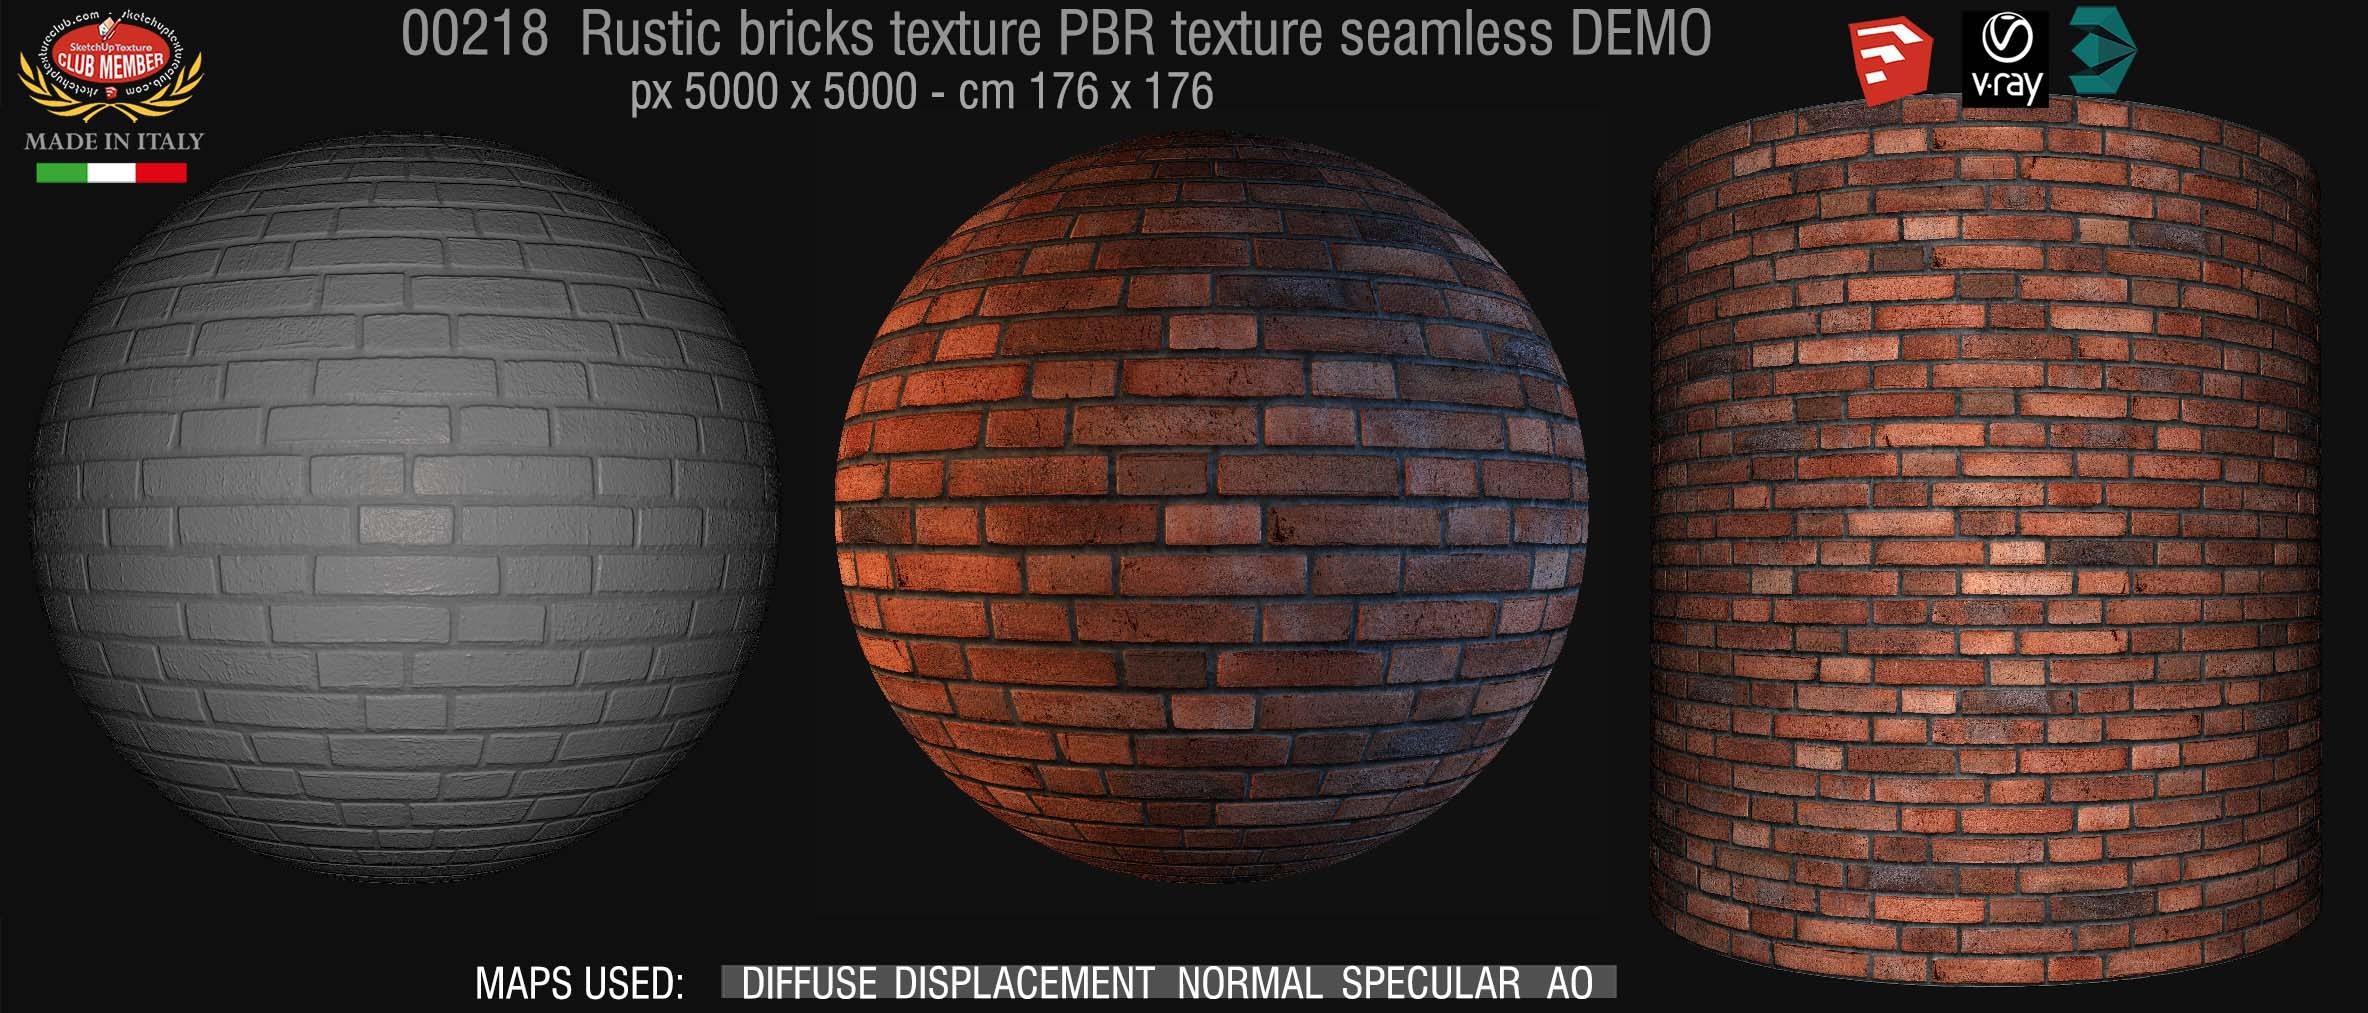 00218 rustic bricks PBR texture seamless DEMO